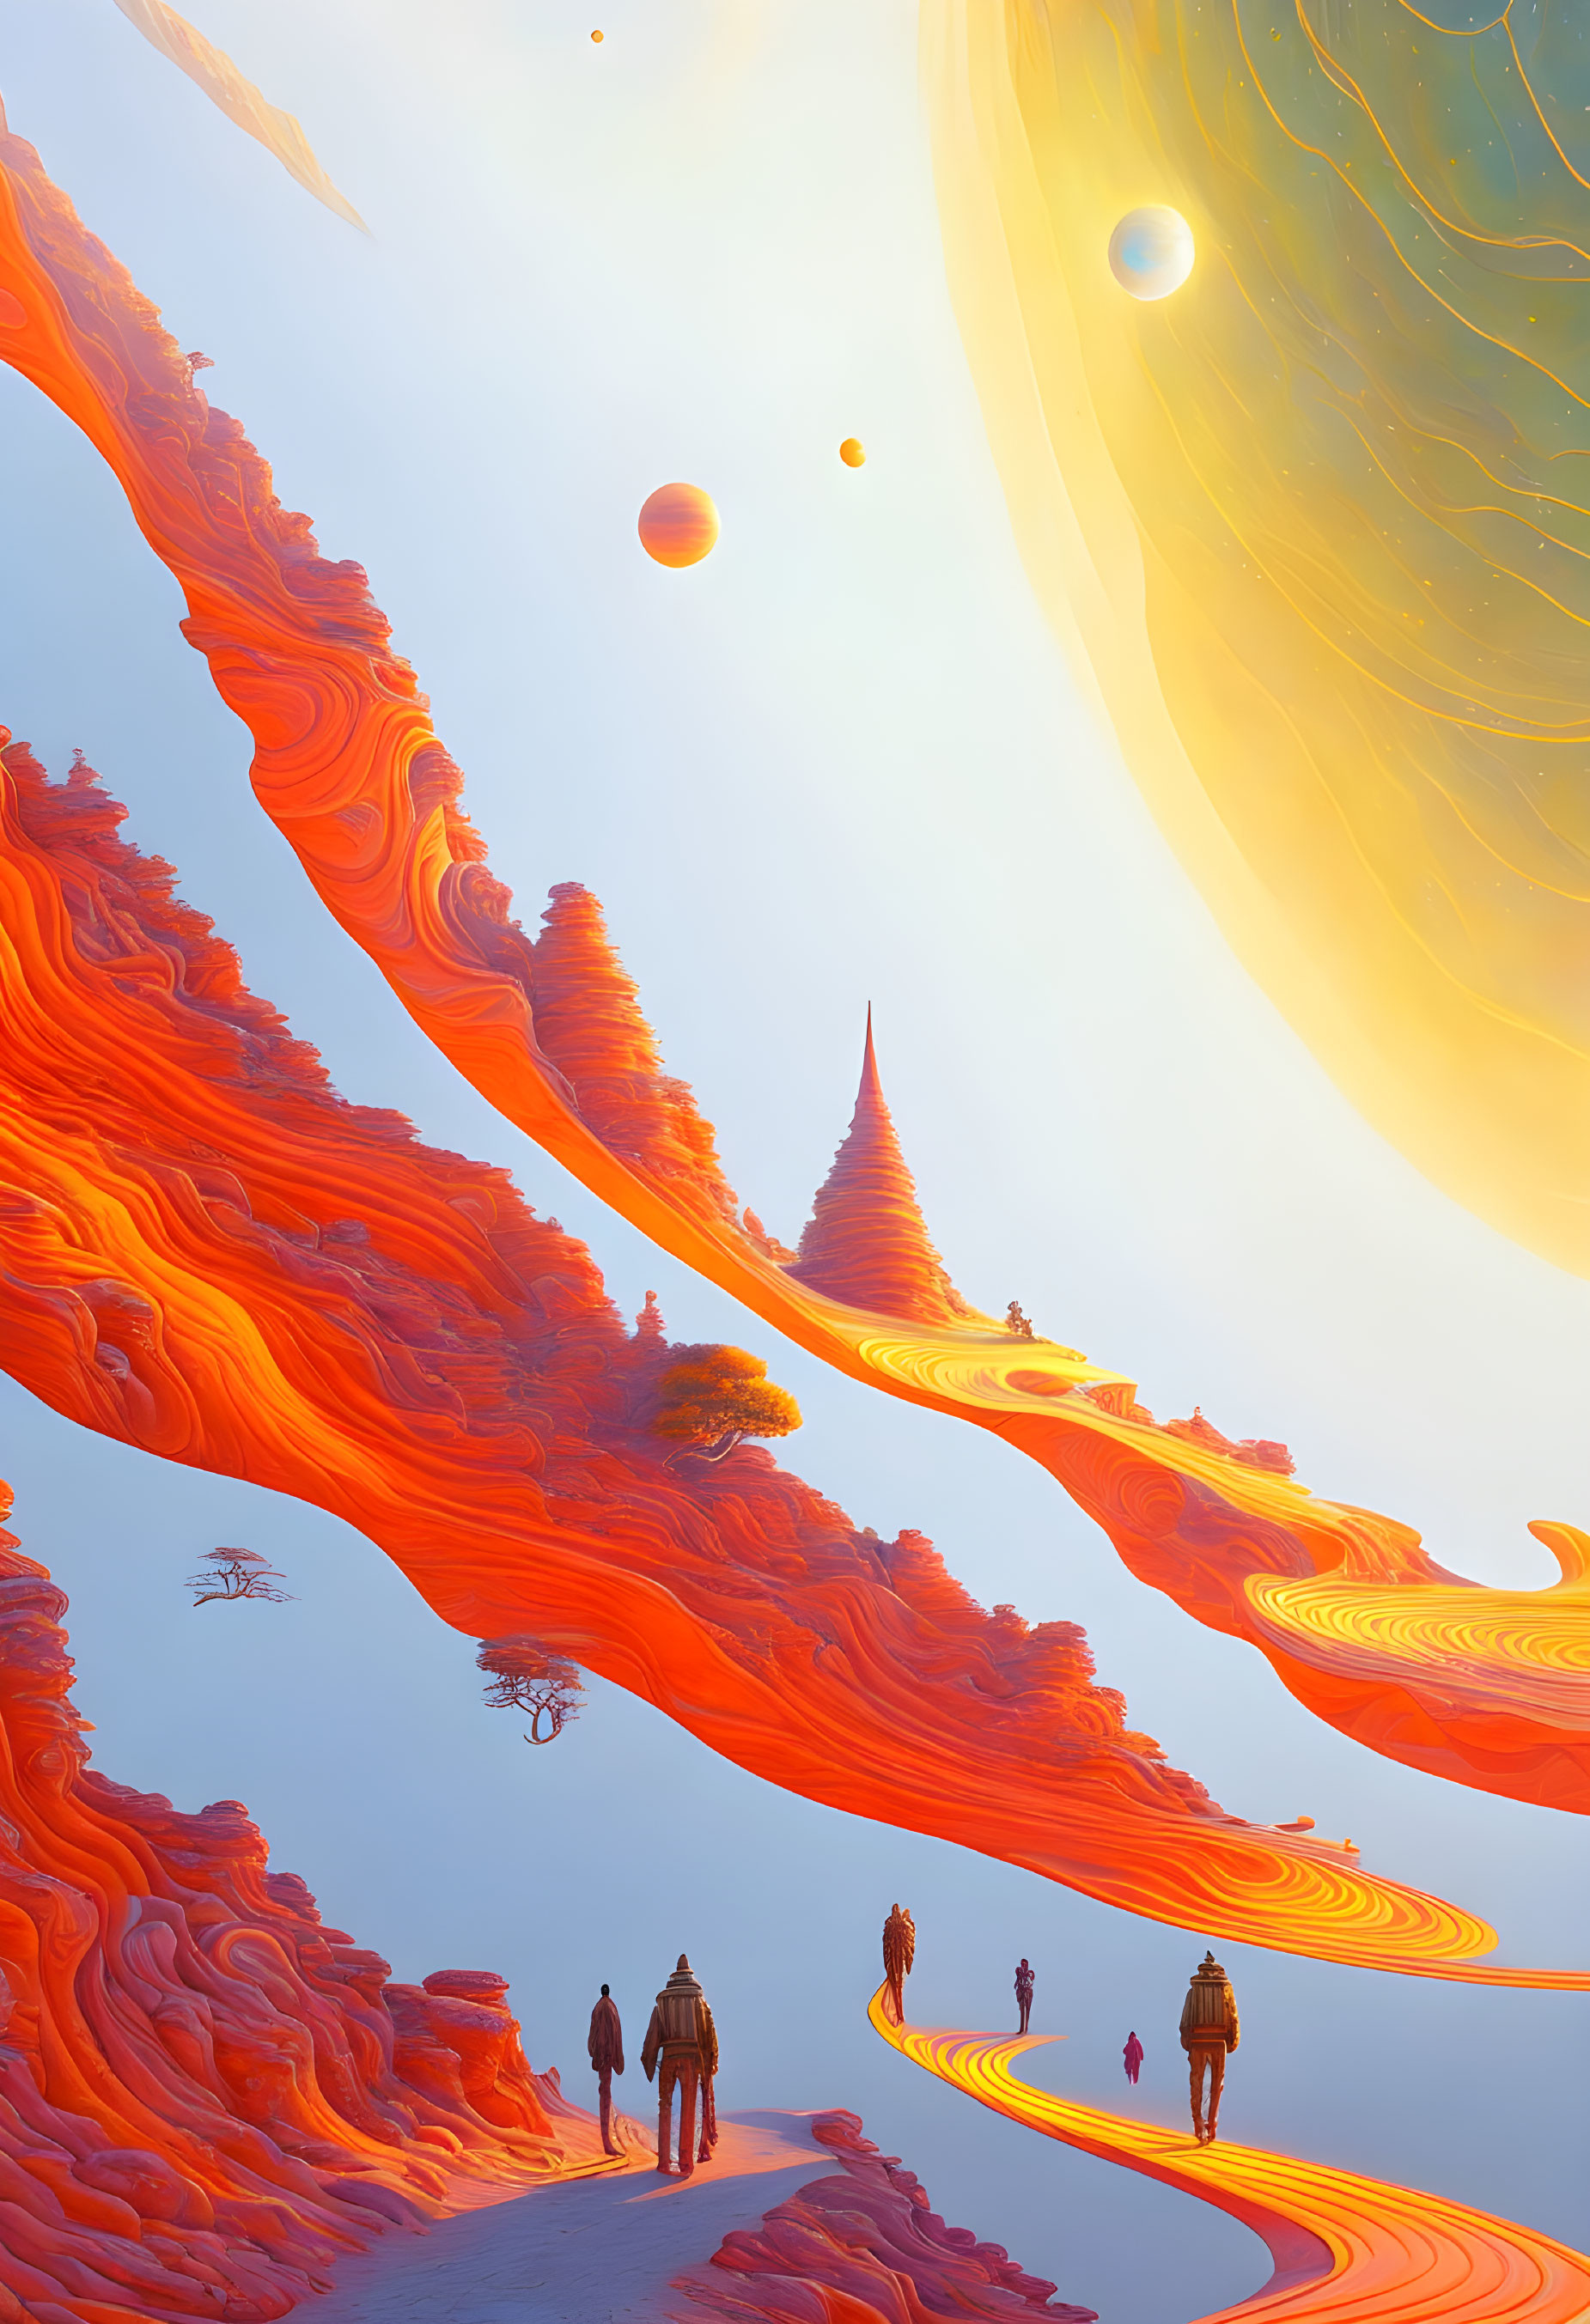 Celestial Wanderers: The Orange Path